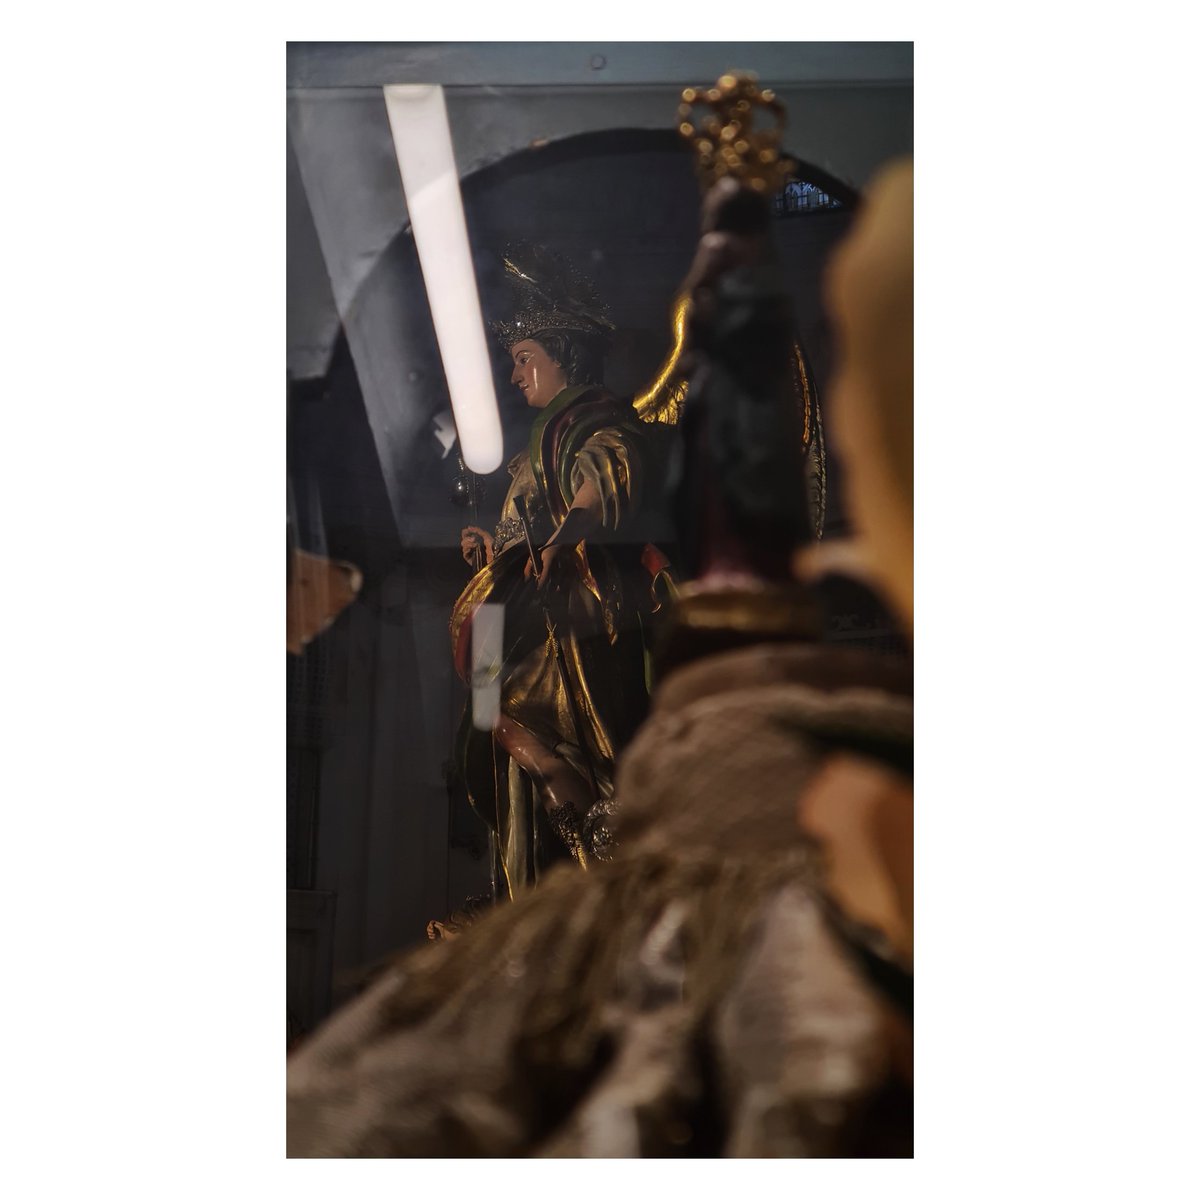 [ ÁNGELES DE NEÓN ]
.
.
.
San Rafael y la Virgen del Pozo. Alonso Gómez de Sandoval ( 1795 ) y anónimo ( S.XVII ). Iglesia del Juramento. Córdoba 
.
.
.
#sanrafael #cordoba #mayo #art #barroco #photo